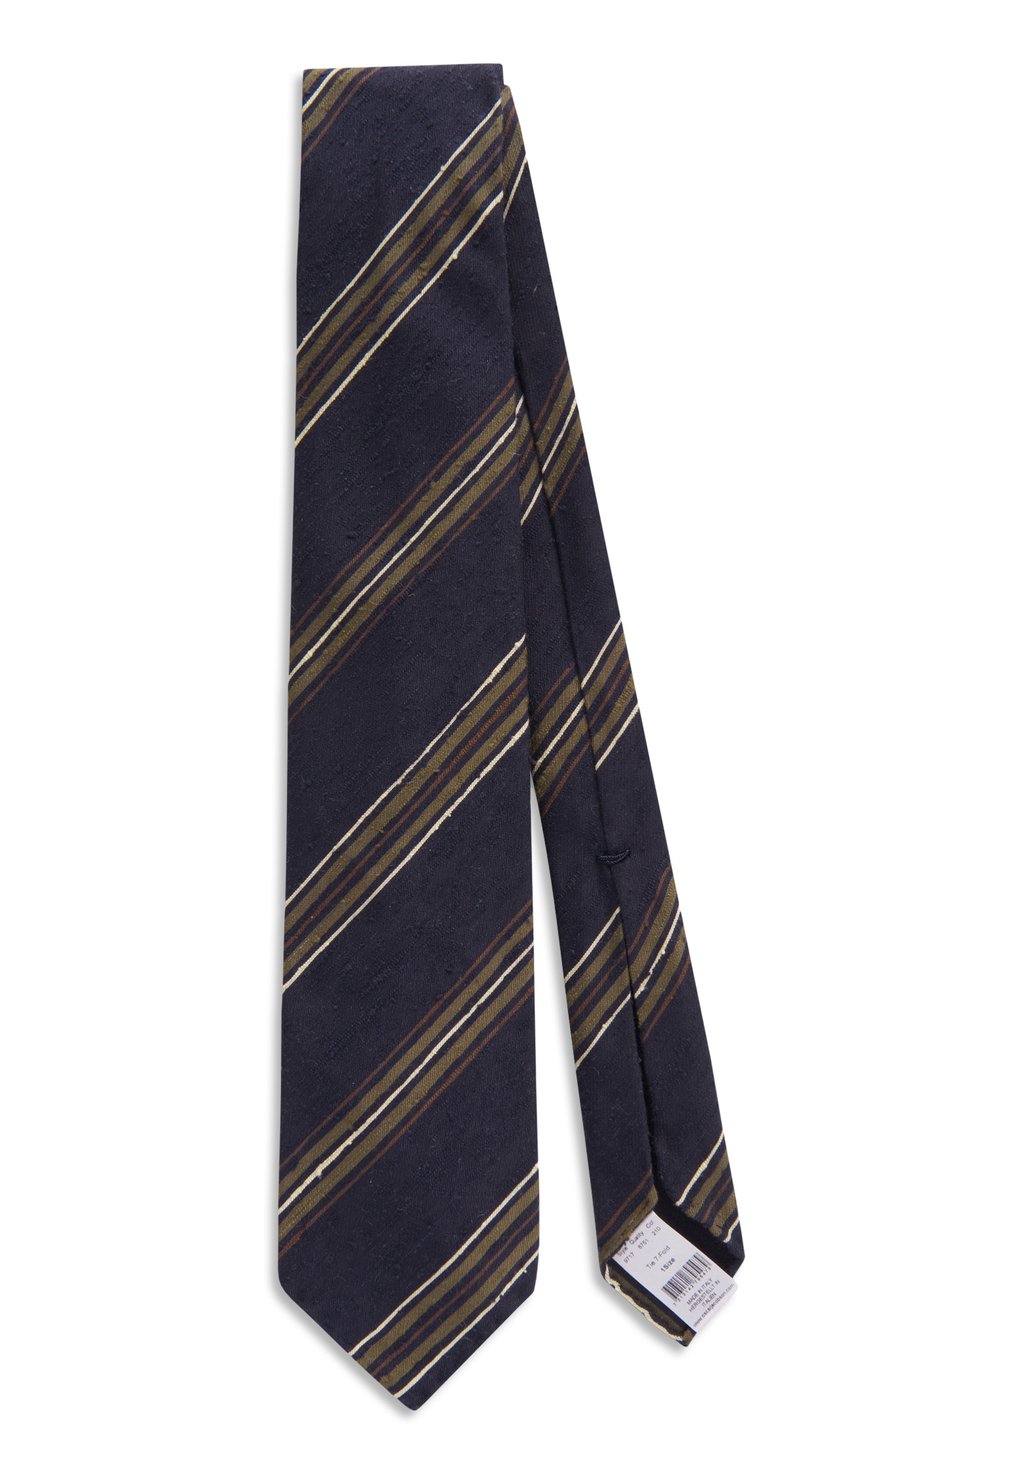 галстук oscar jacobson цвет french blue Галстук 7-FOLD Oscar Jacobson, цвет navy